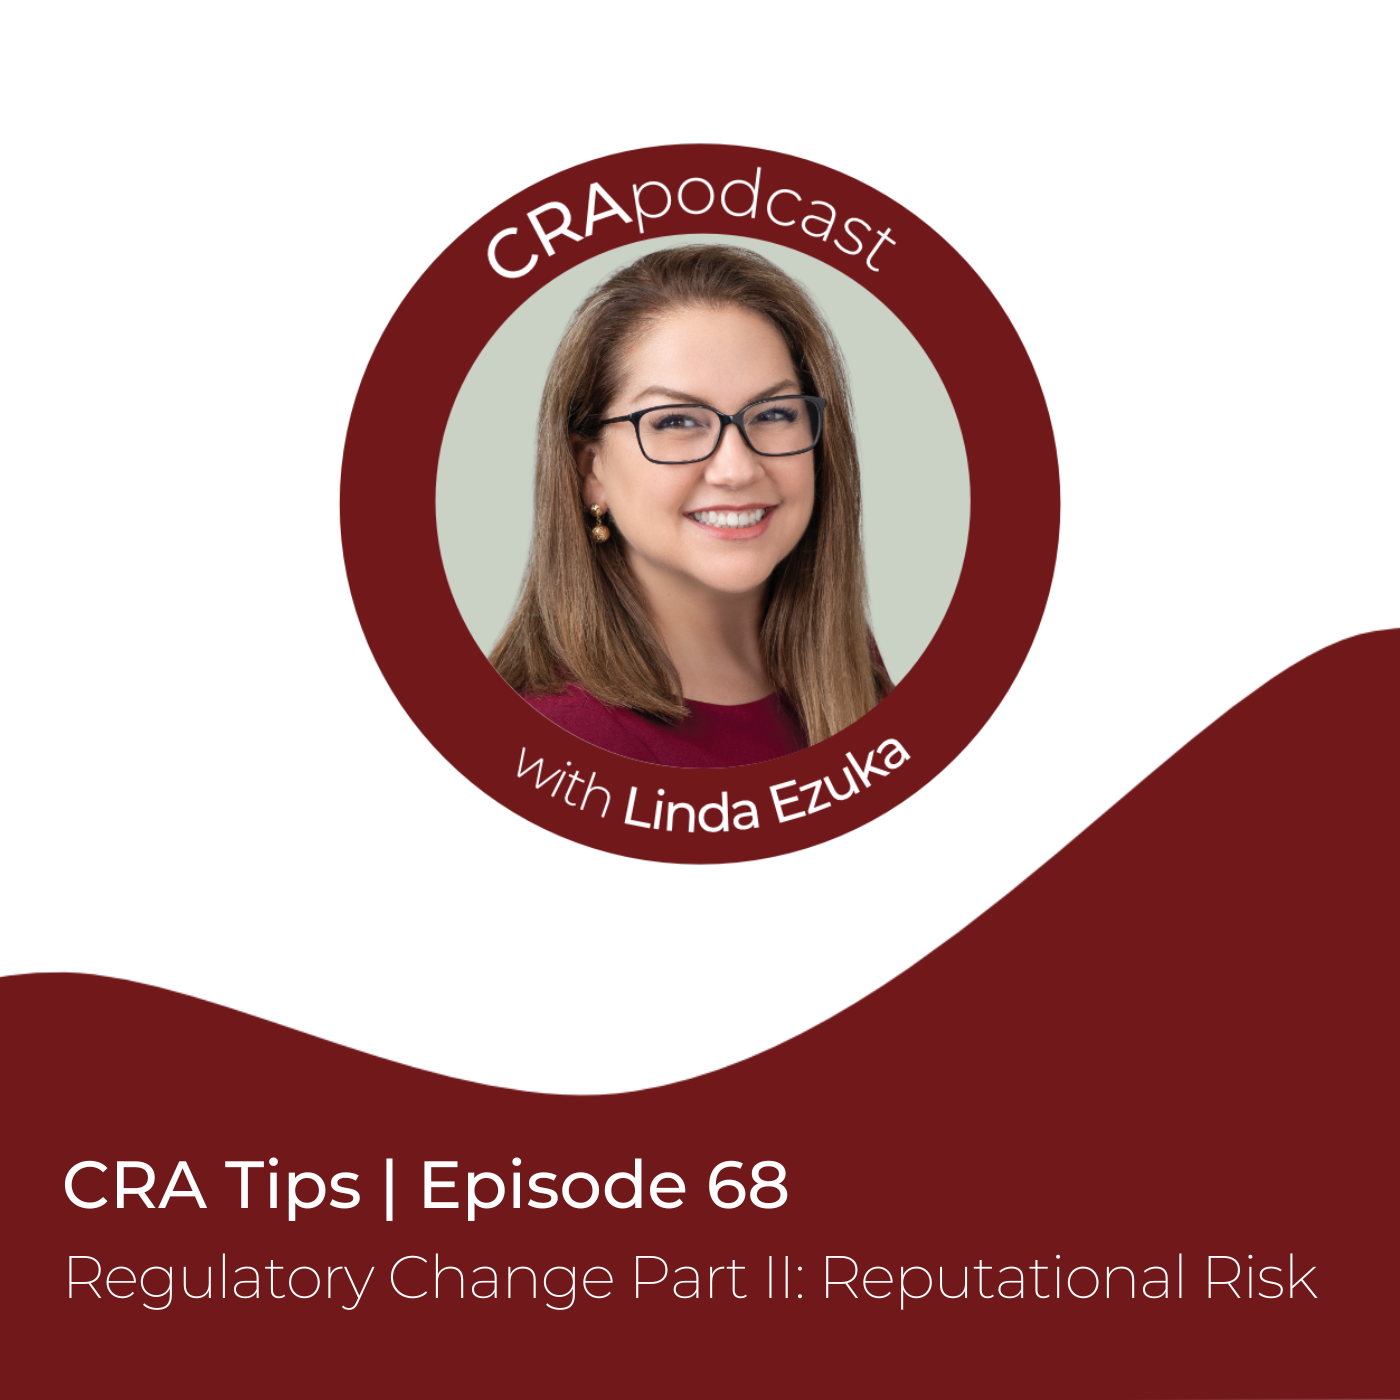 Episode 68: CRA Tips: Regulatory Change Part II: Reputational Risk